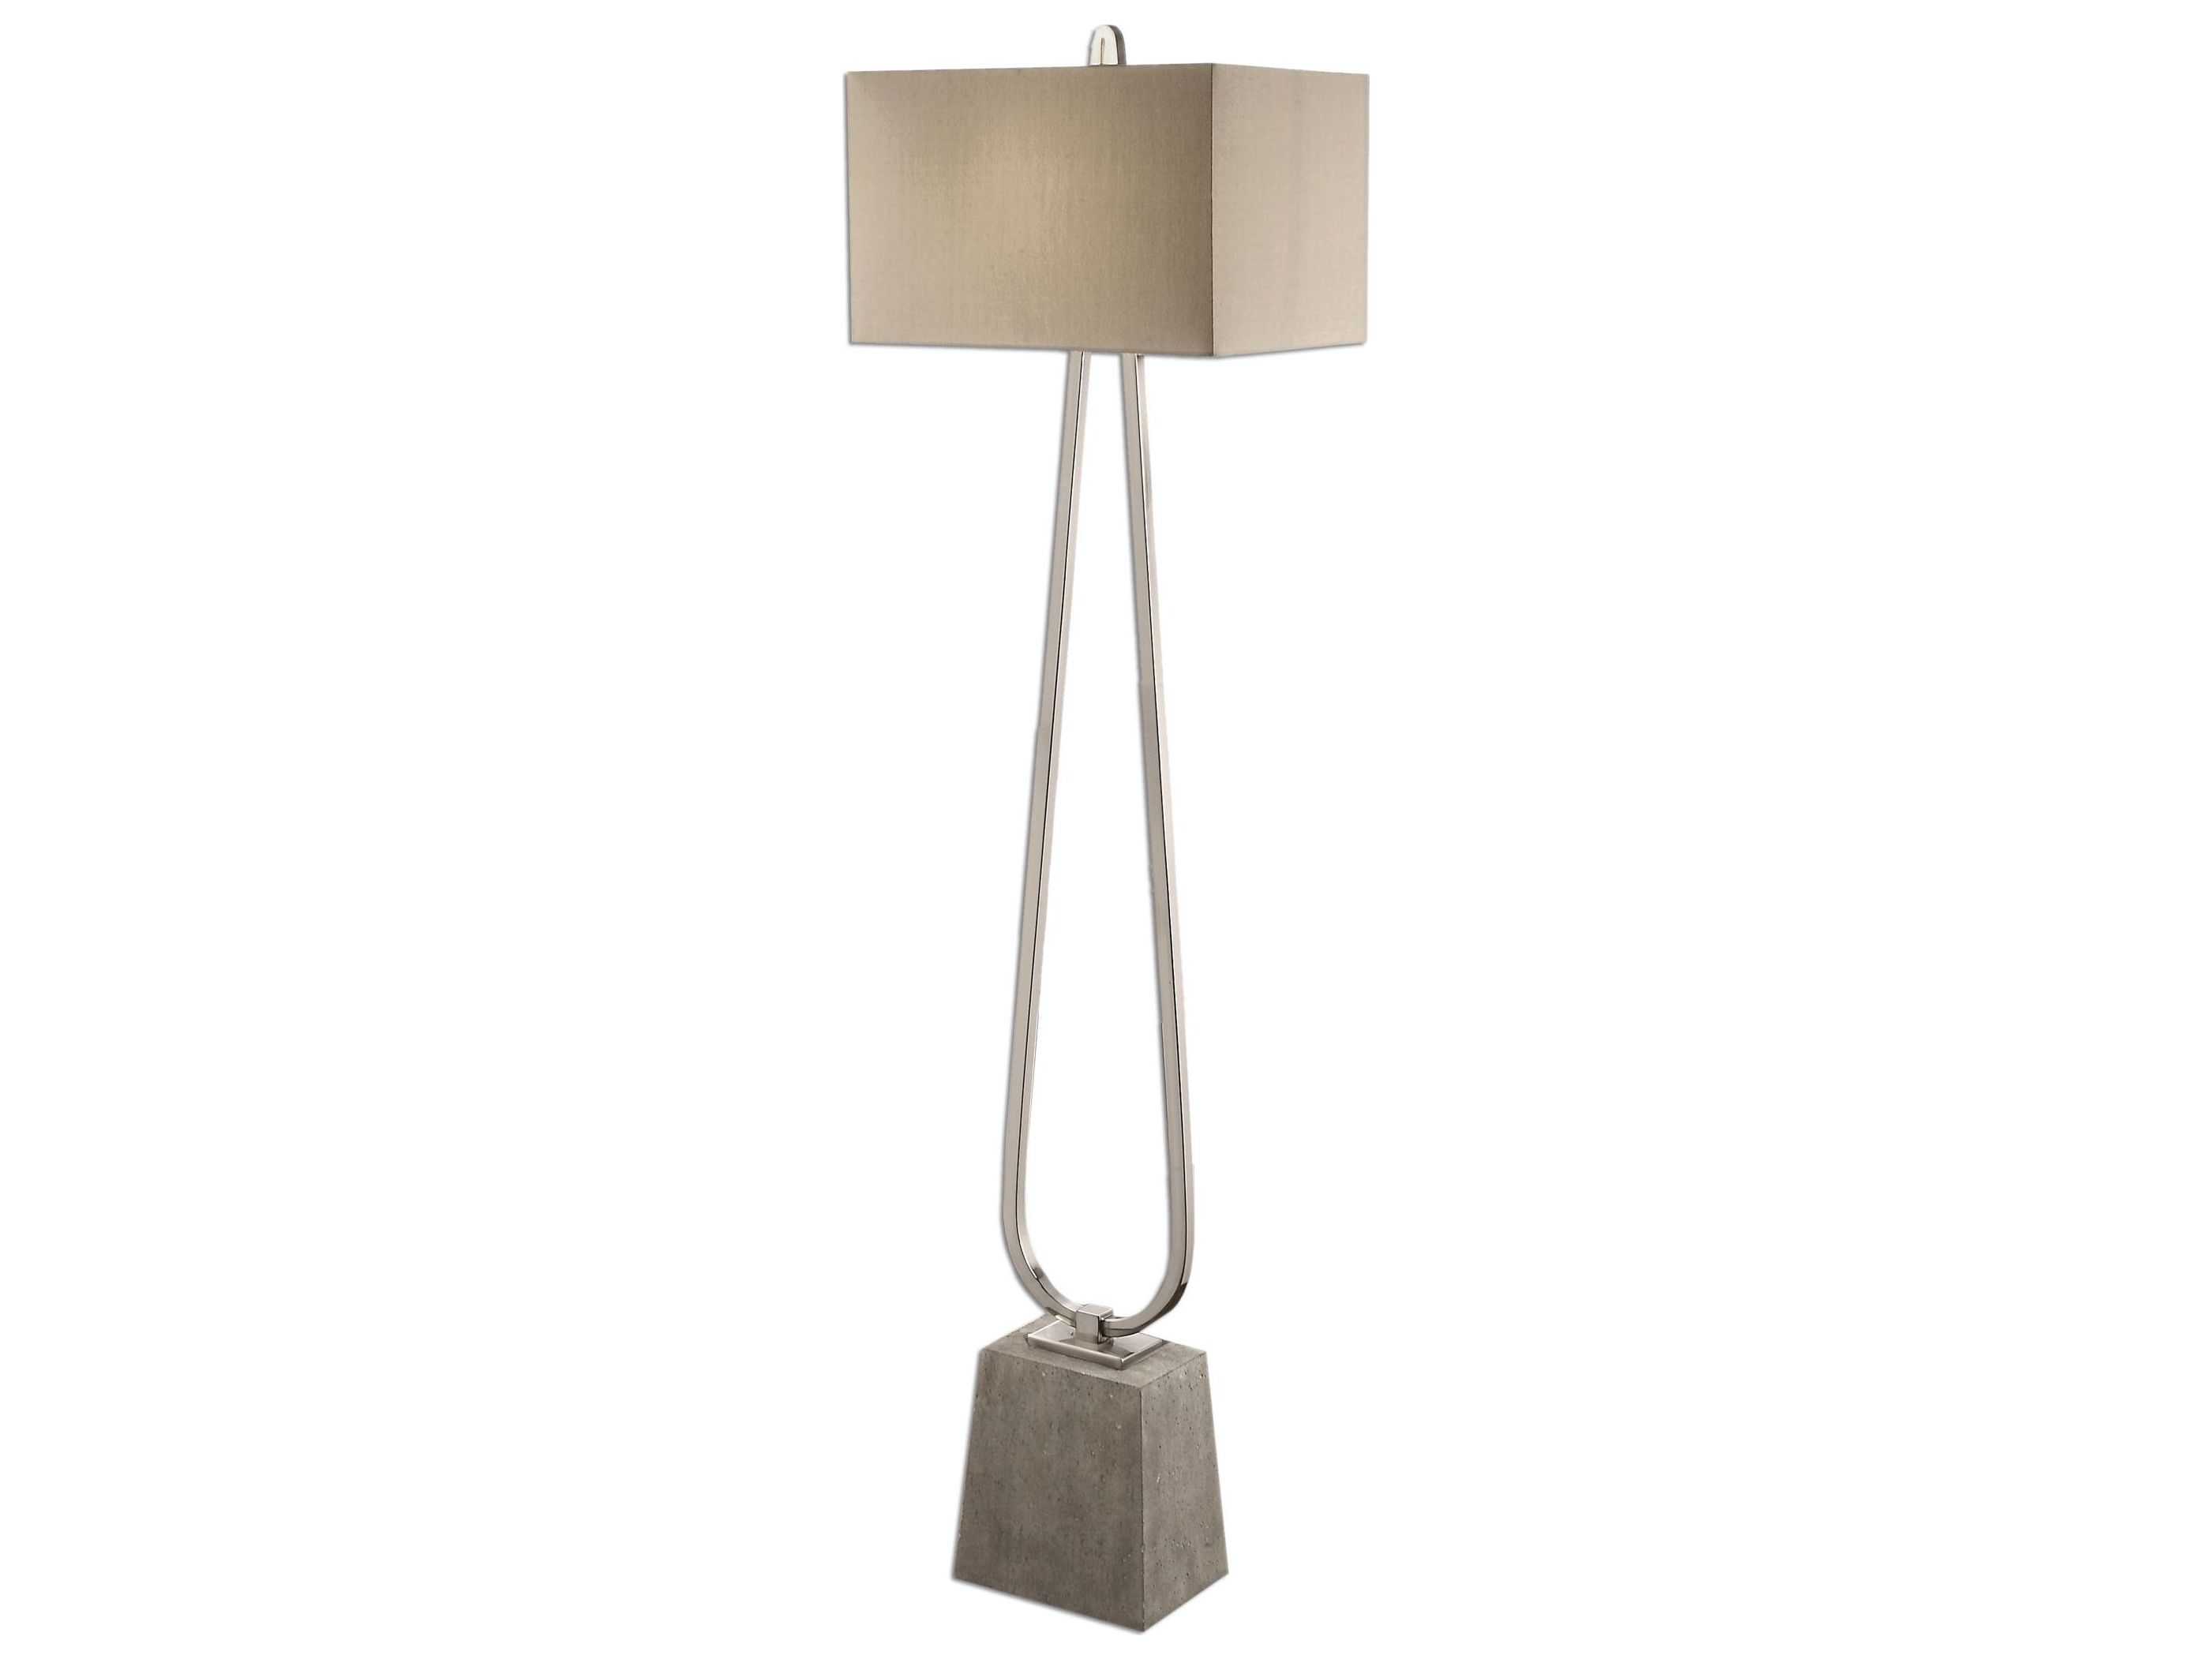 Uttermost Floor Lamps / Farraige Floor Lamp | Uttermost - Floor lamp